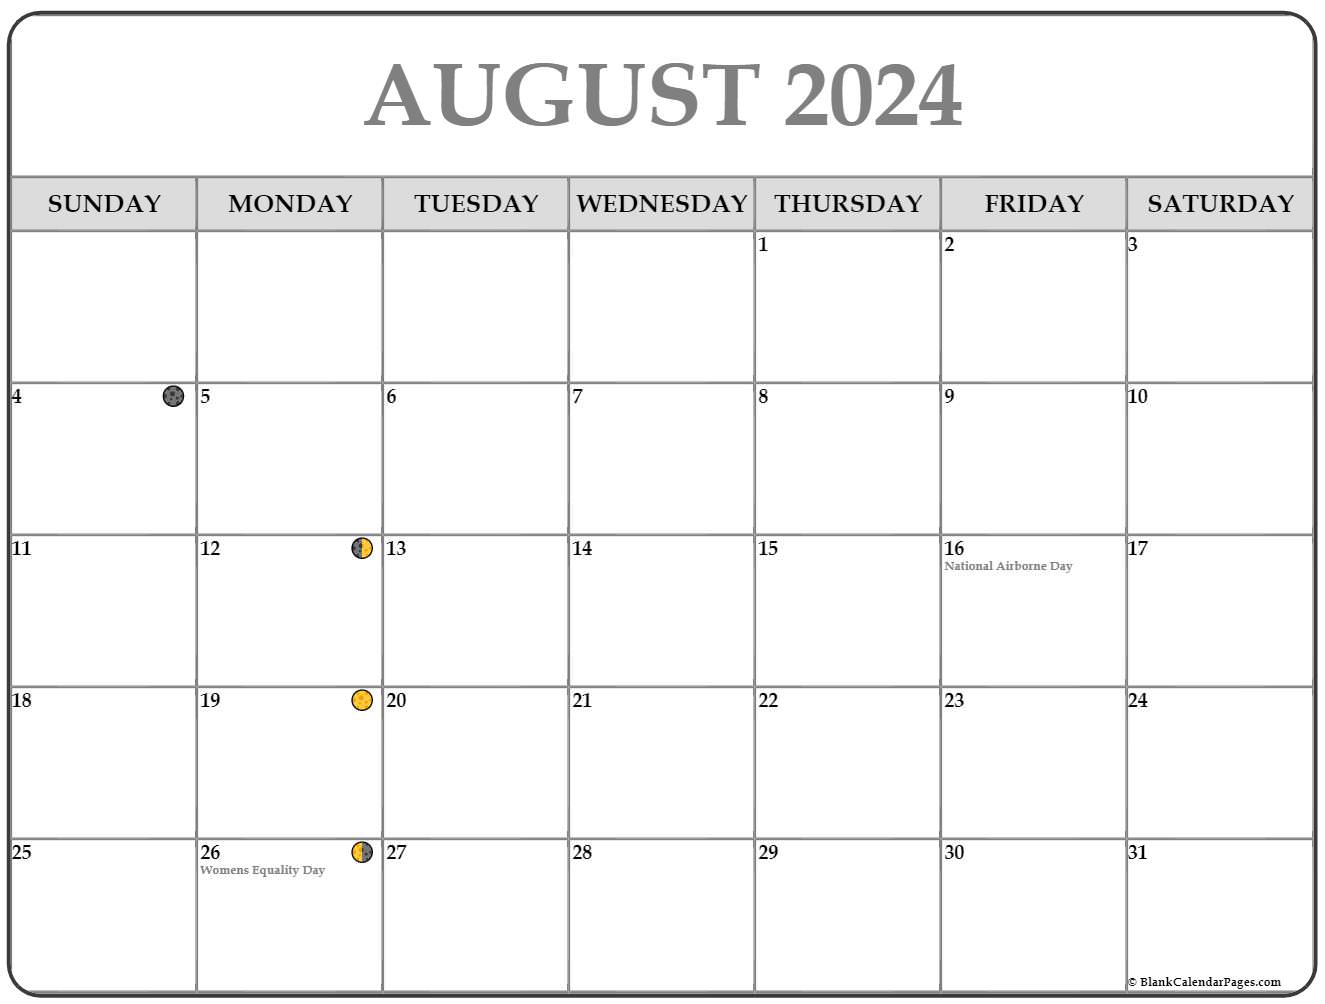 August 2024 Lunar Calendar Moon Phase Calendar